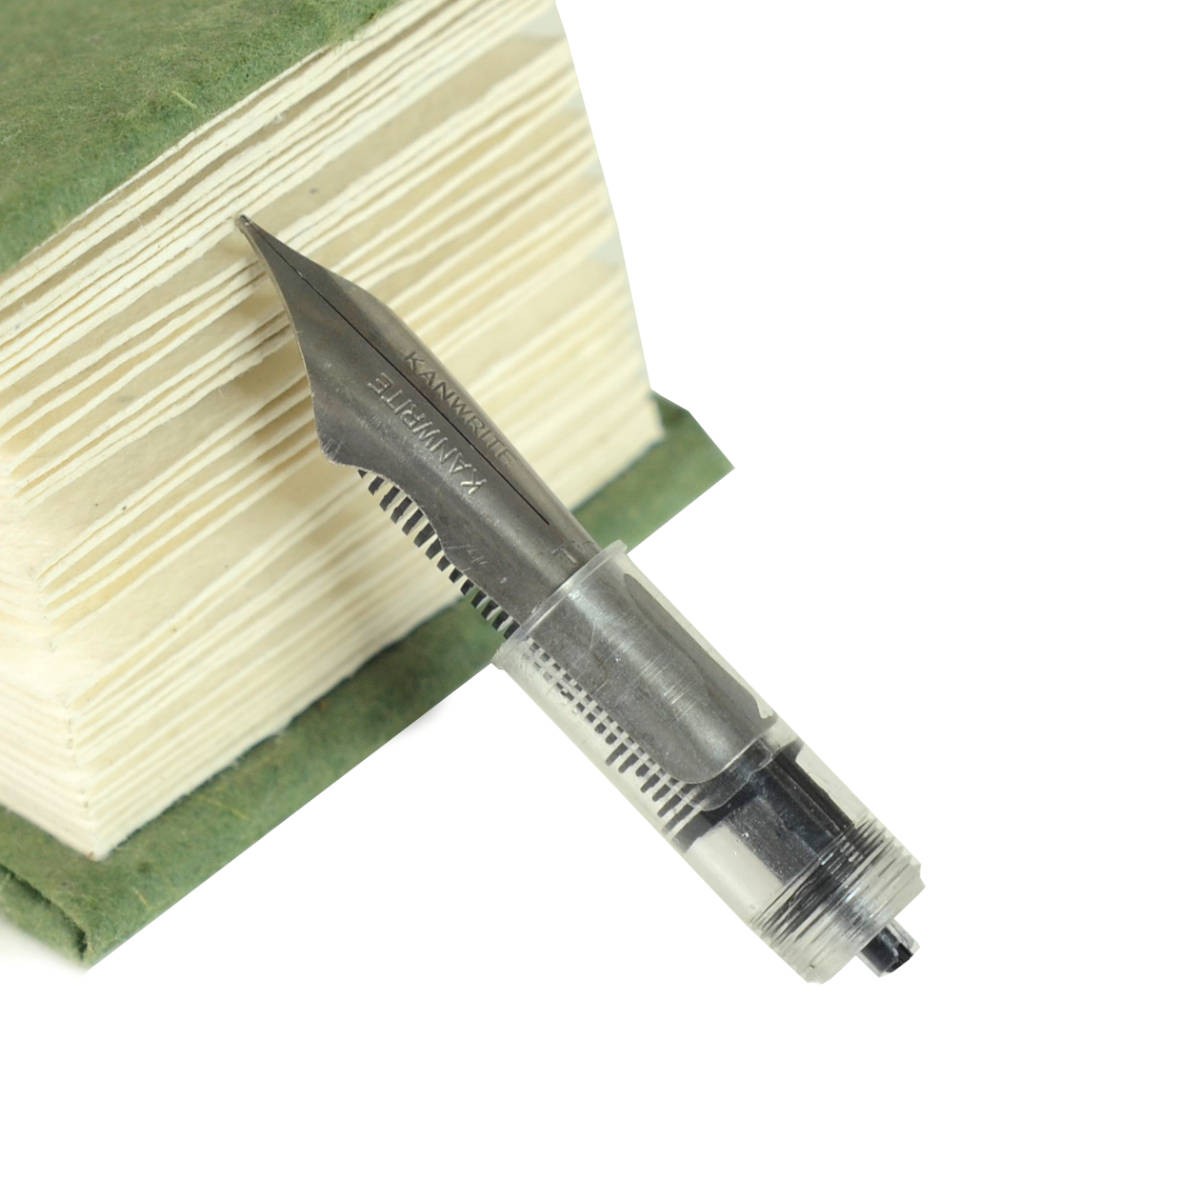 Titanium bock fountain pen nib unit with ultra flex extra fine point  – Kanwrite